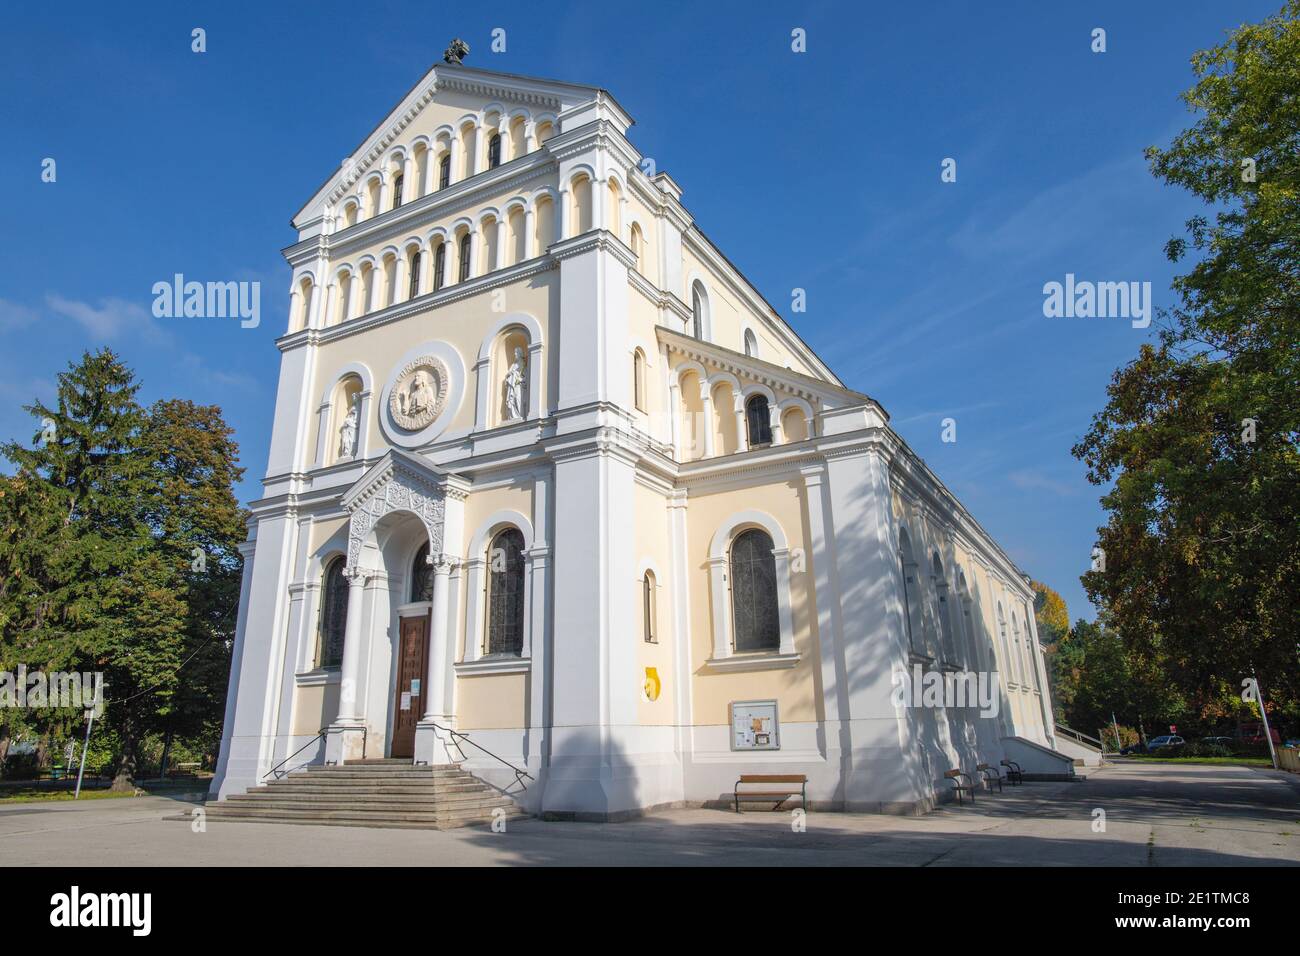 VIENA, AUSTIRA - 22 DE OCTUBRE de 2020: La iglesia Pfarrkirche Kaisermühlen de finales de 19. Foto de stock